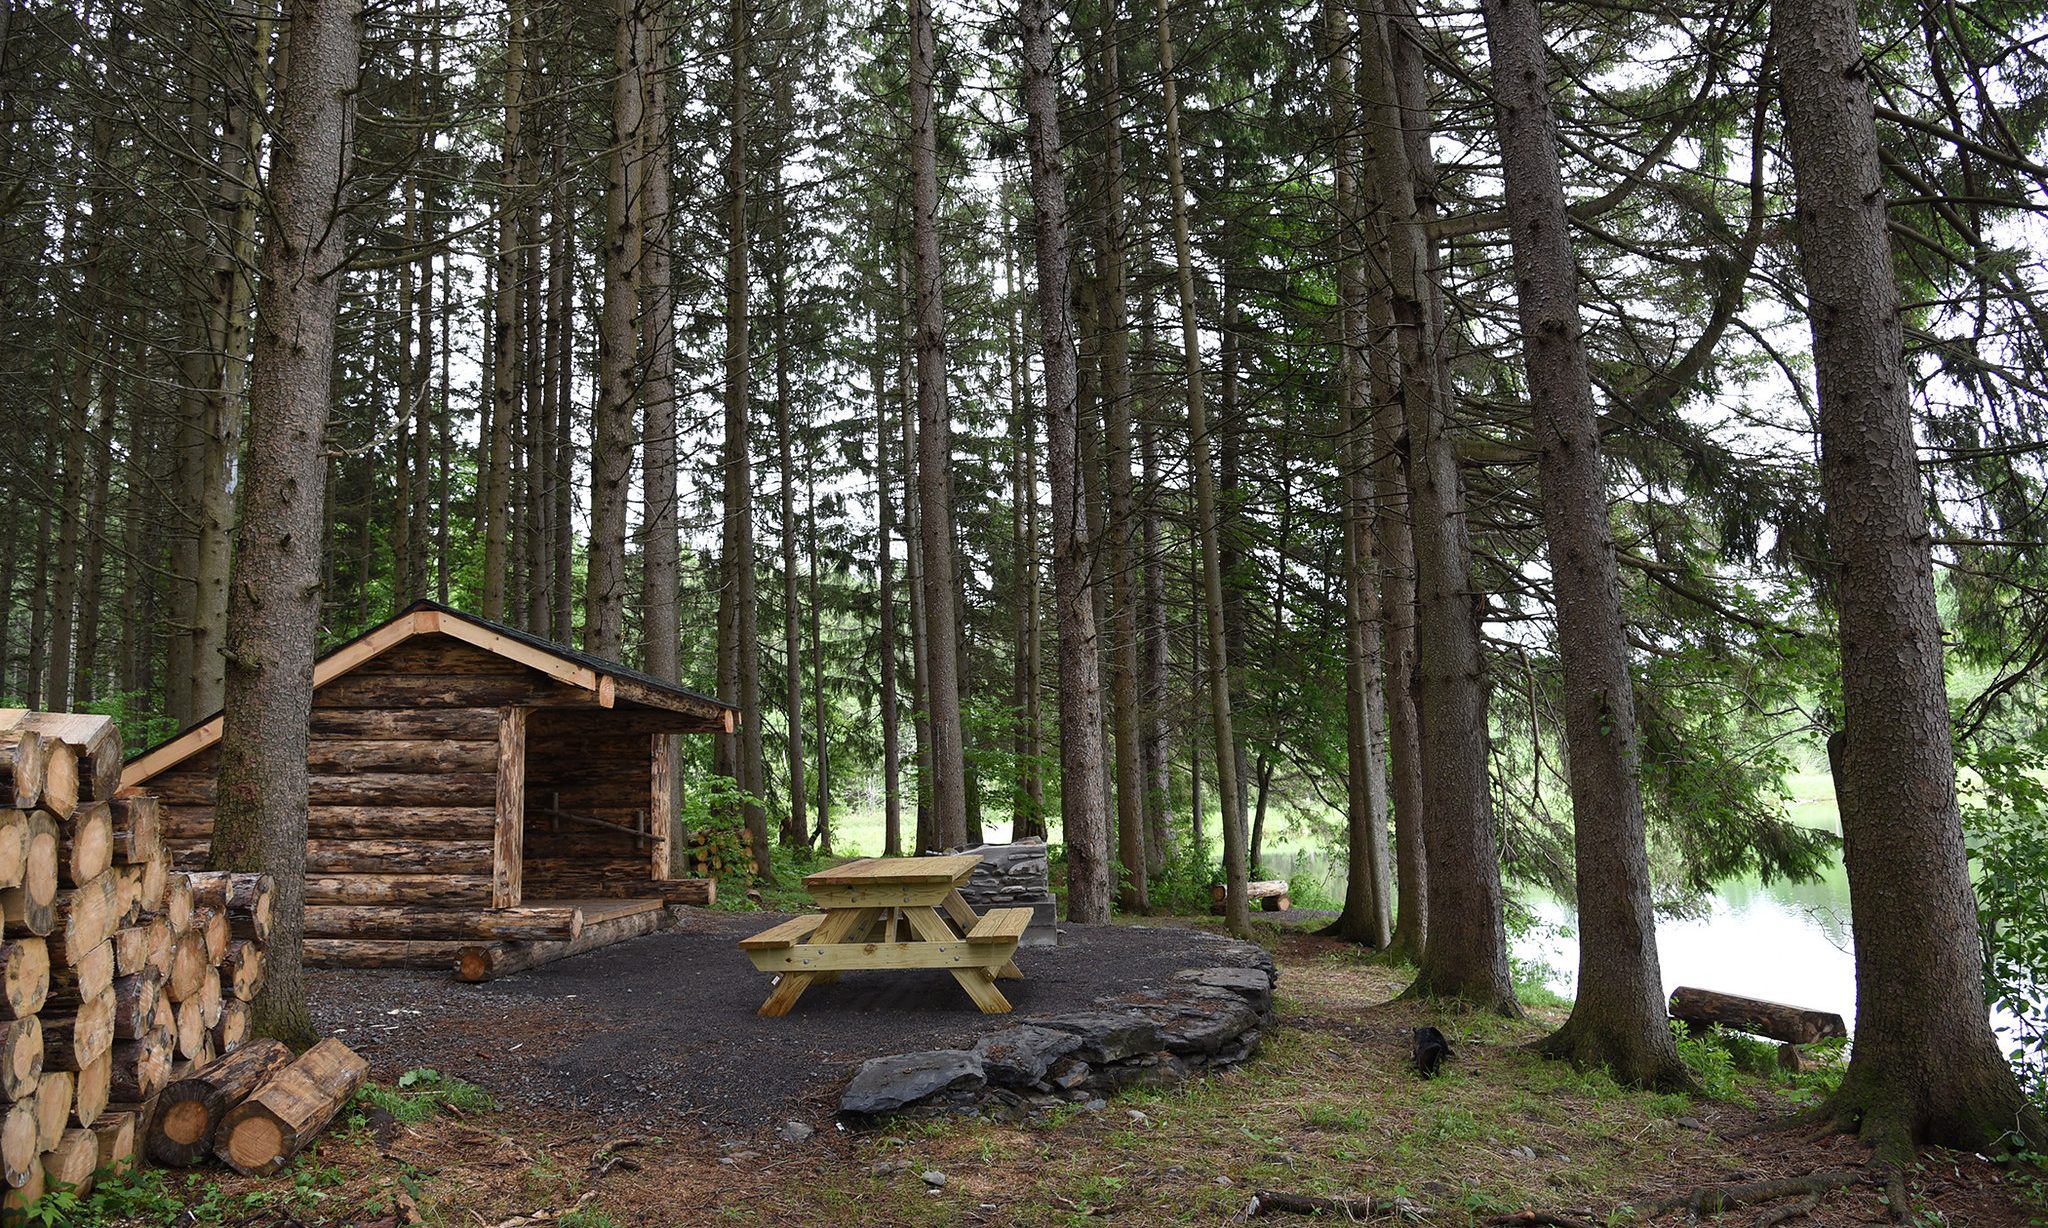 Adirondacks, forest, woods, nature, camping